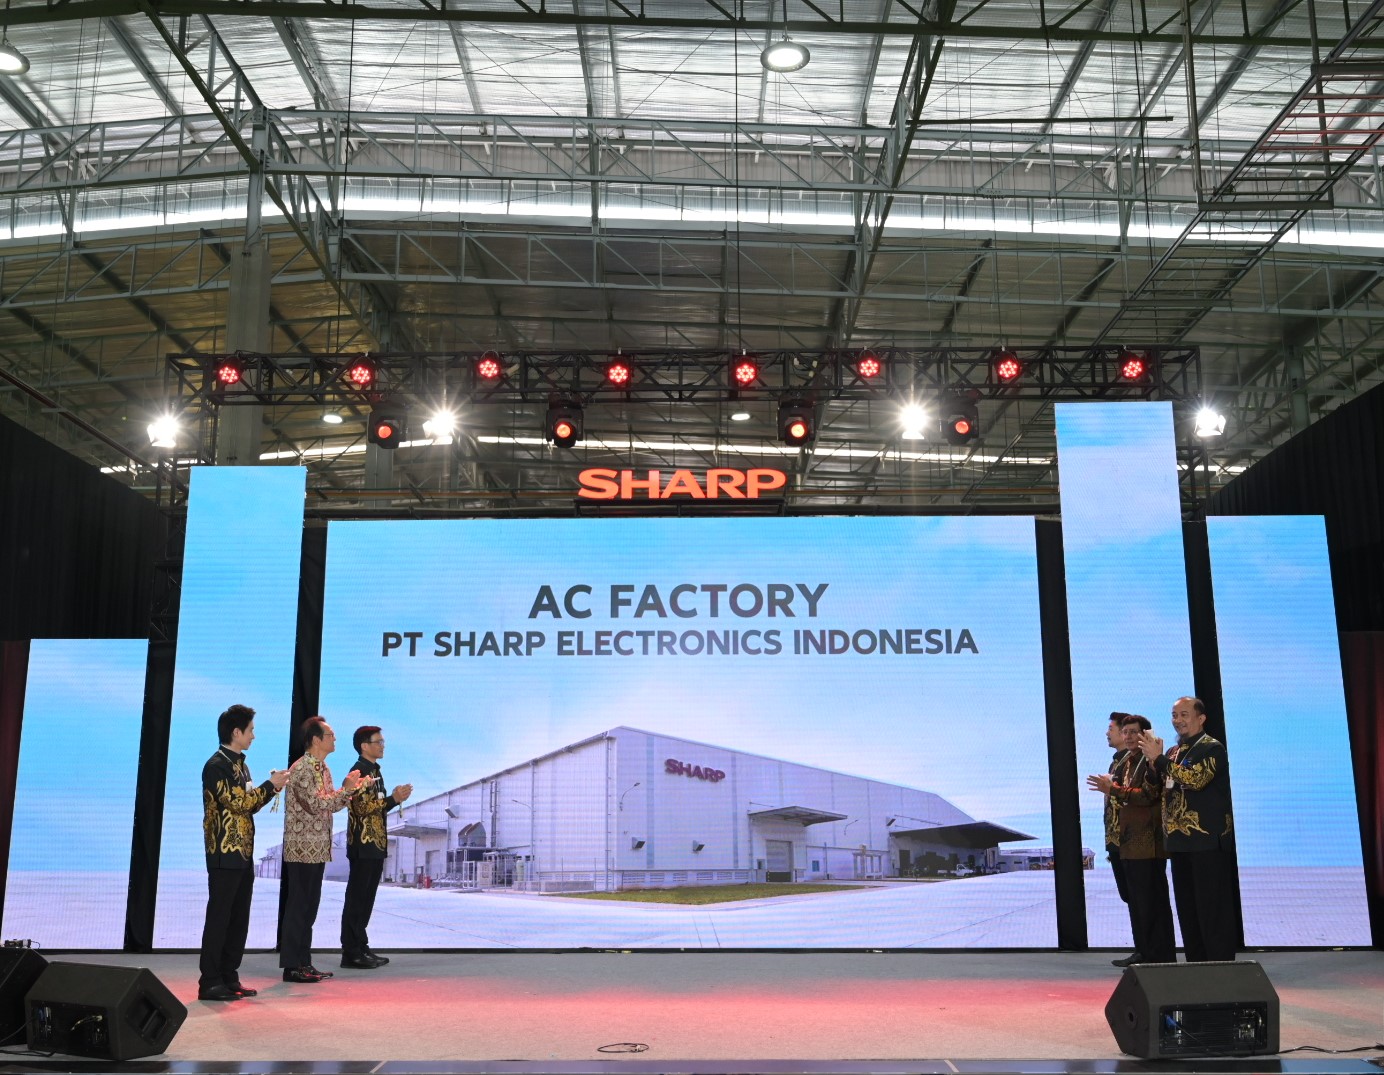 Sharp AC Factory